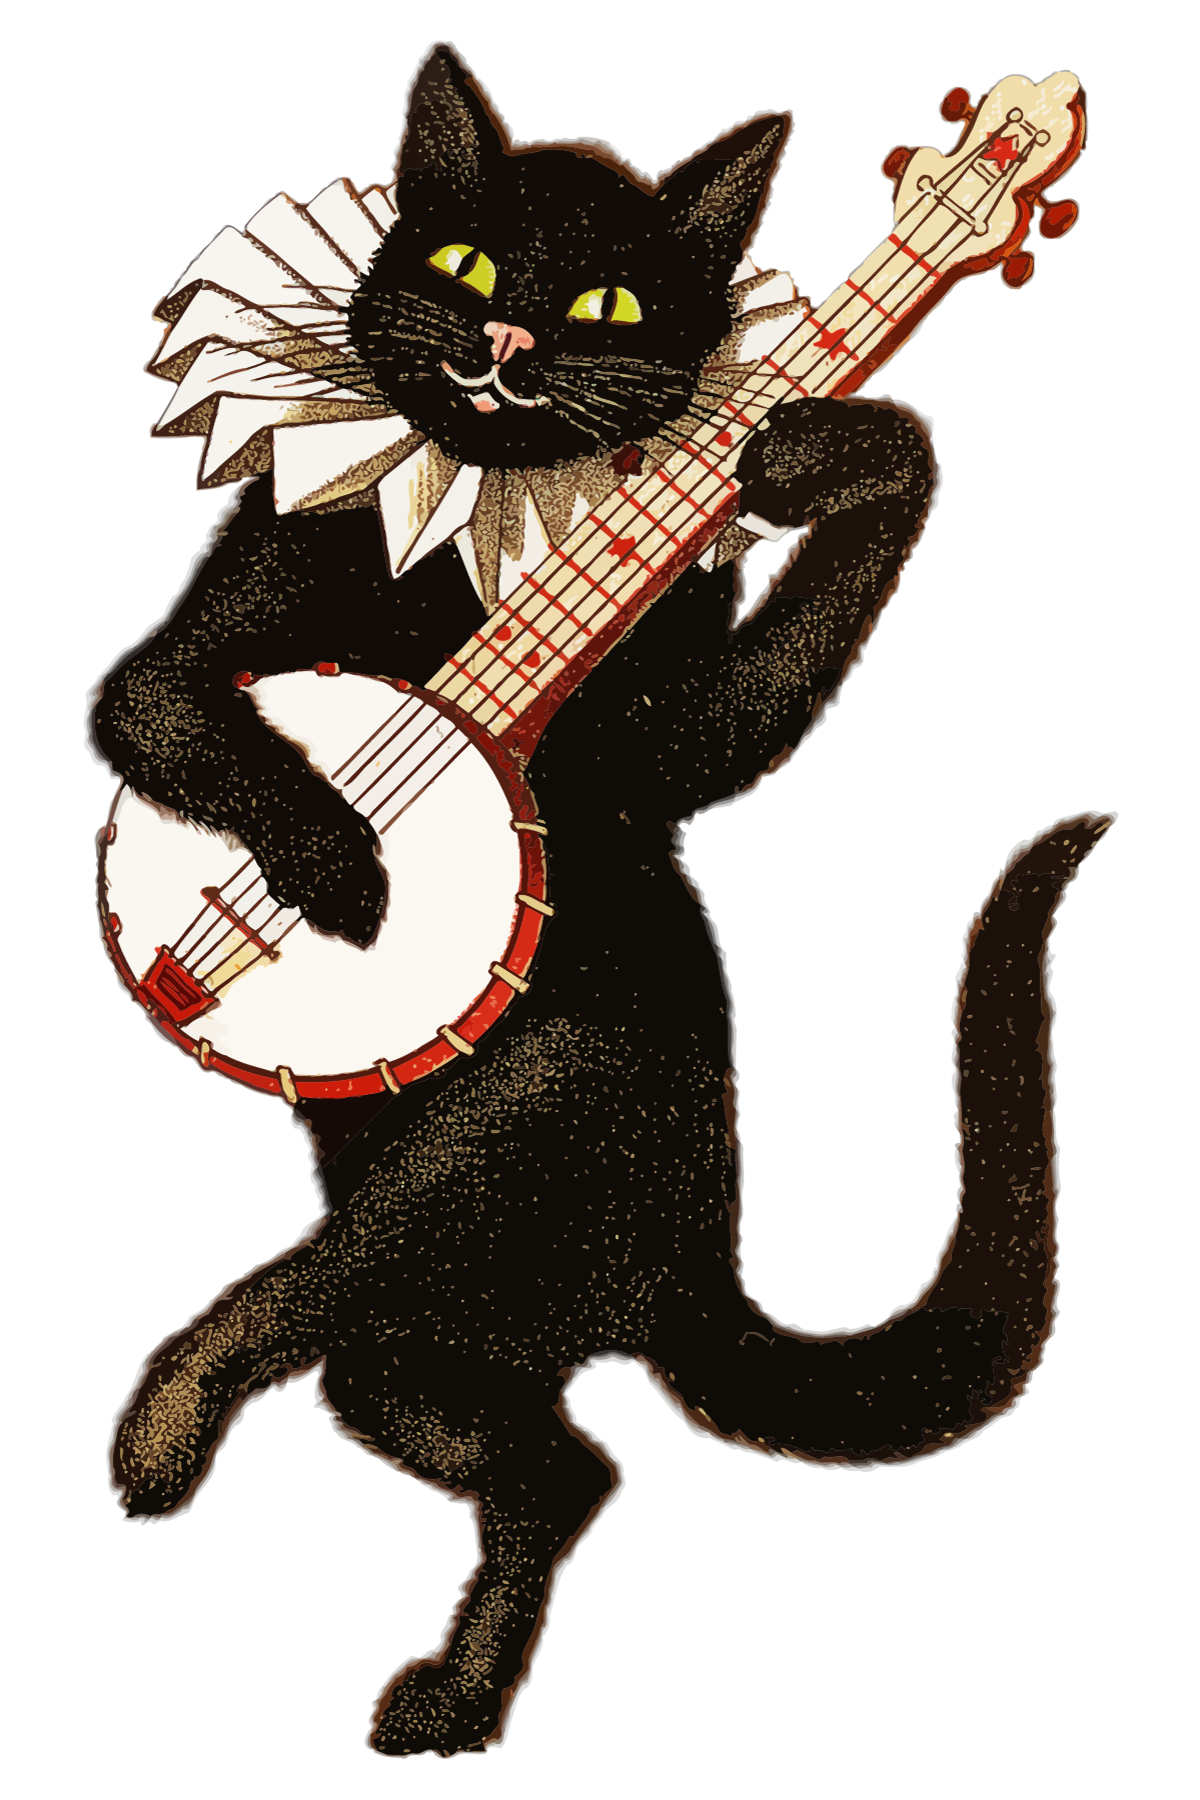 Vintage styled black cat playing banjo